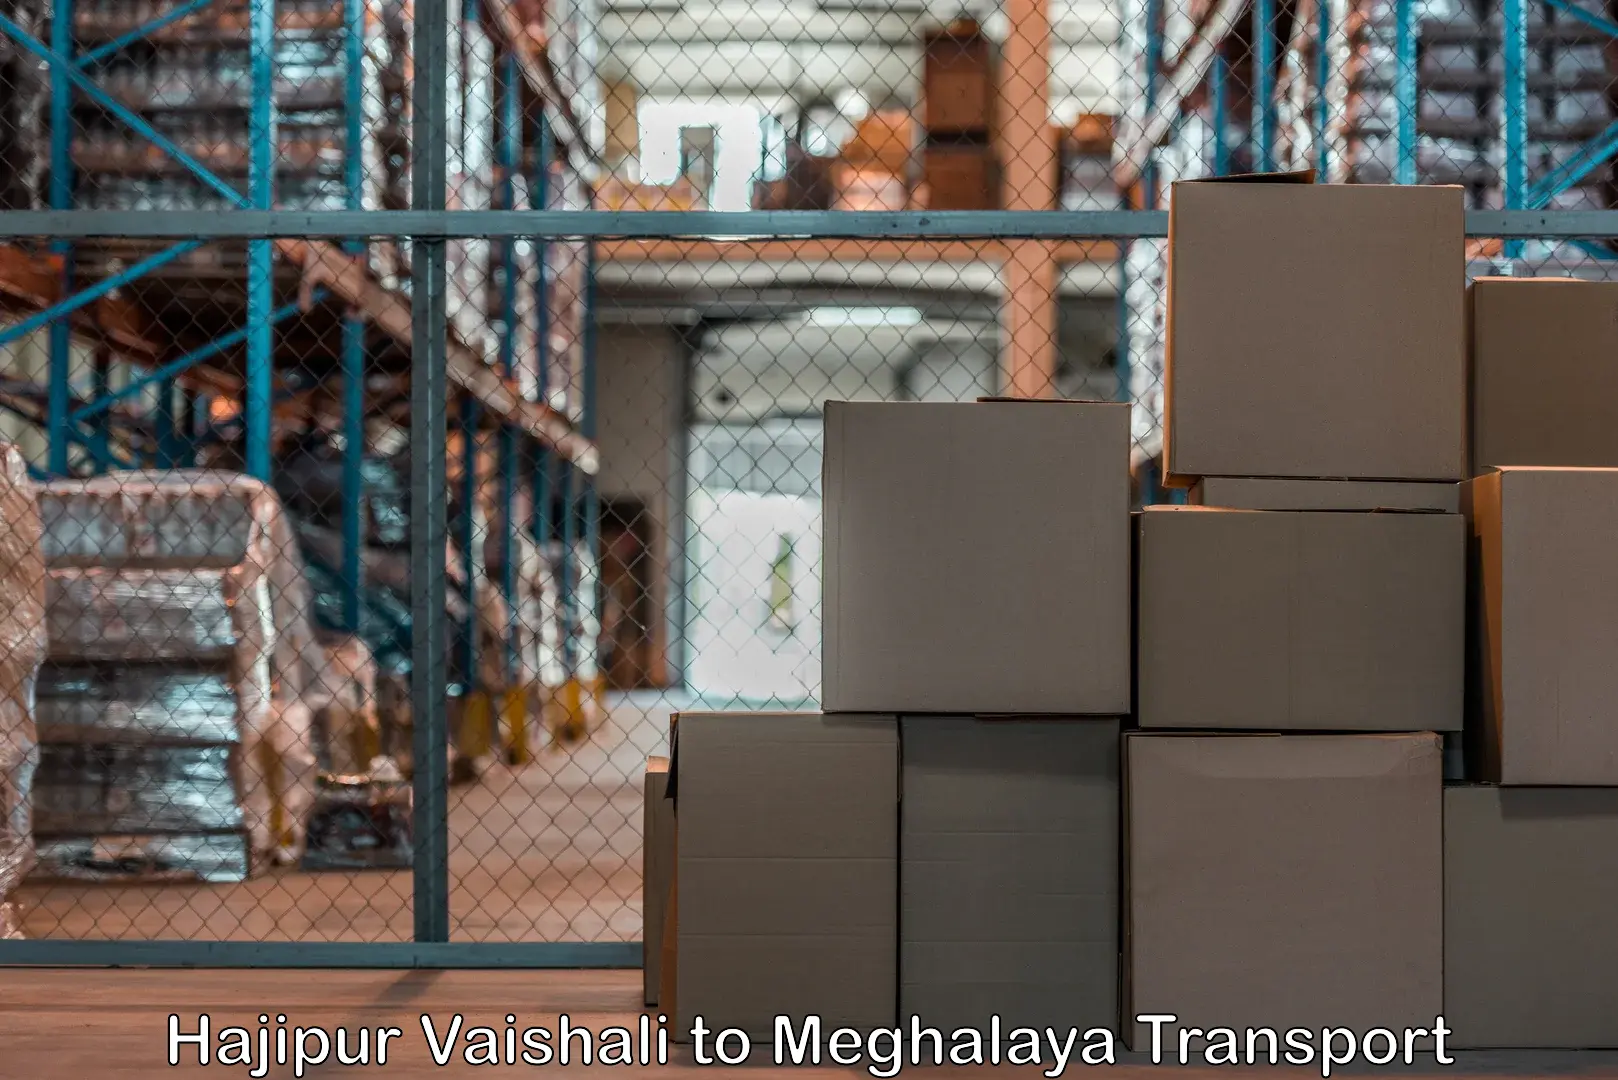 Truck transport companies in India Hajipur Vaishali to Meghalaya